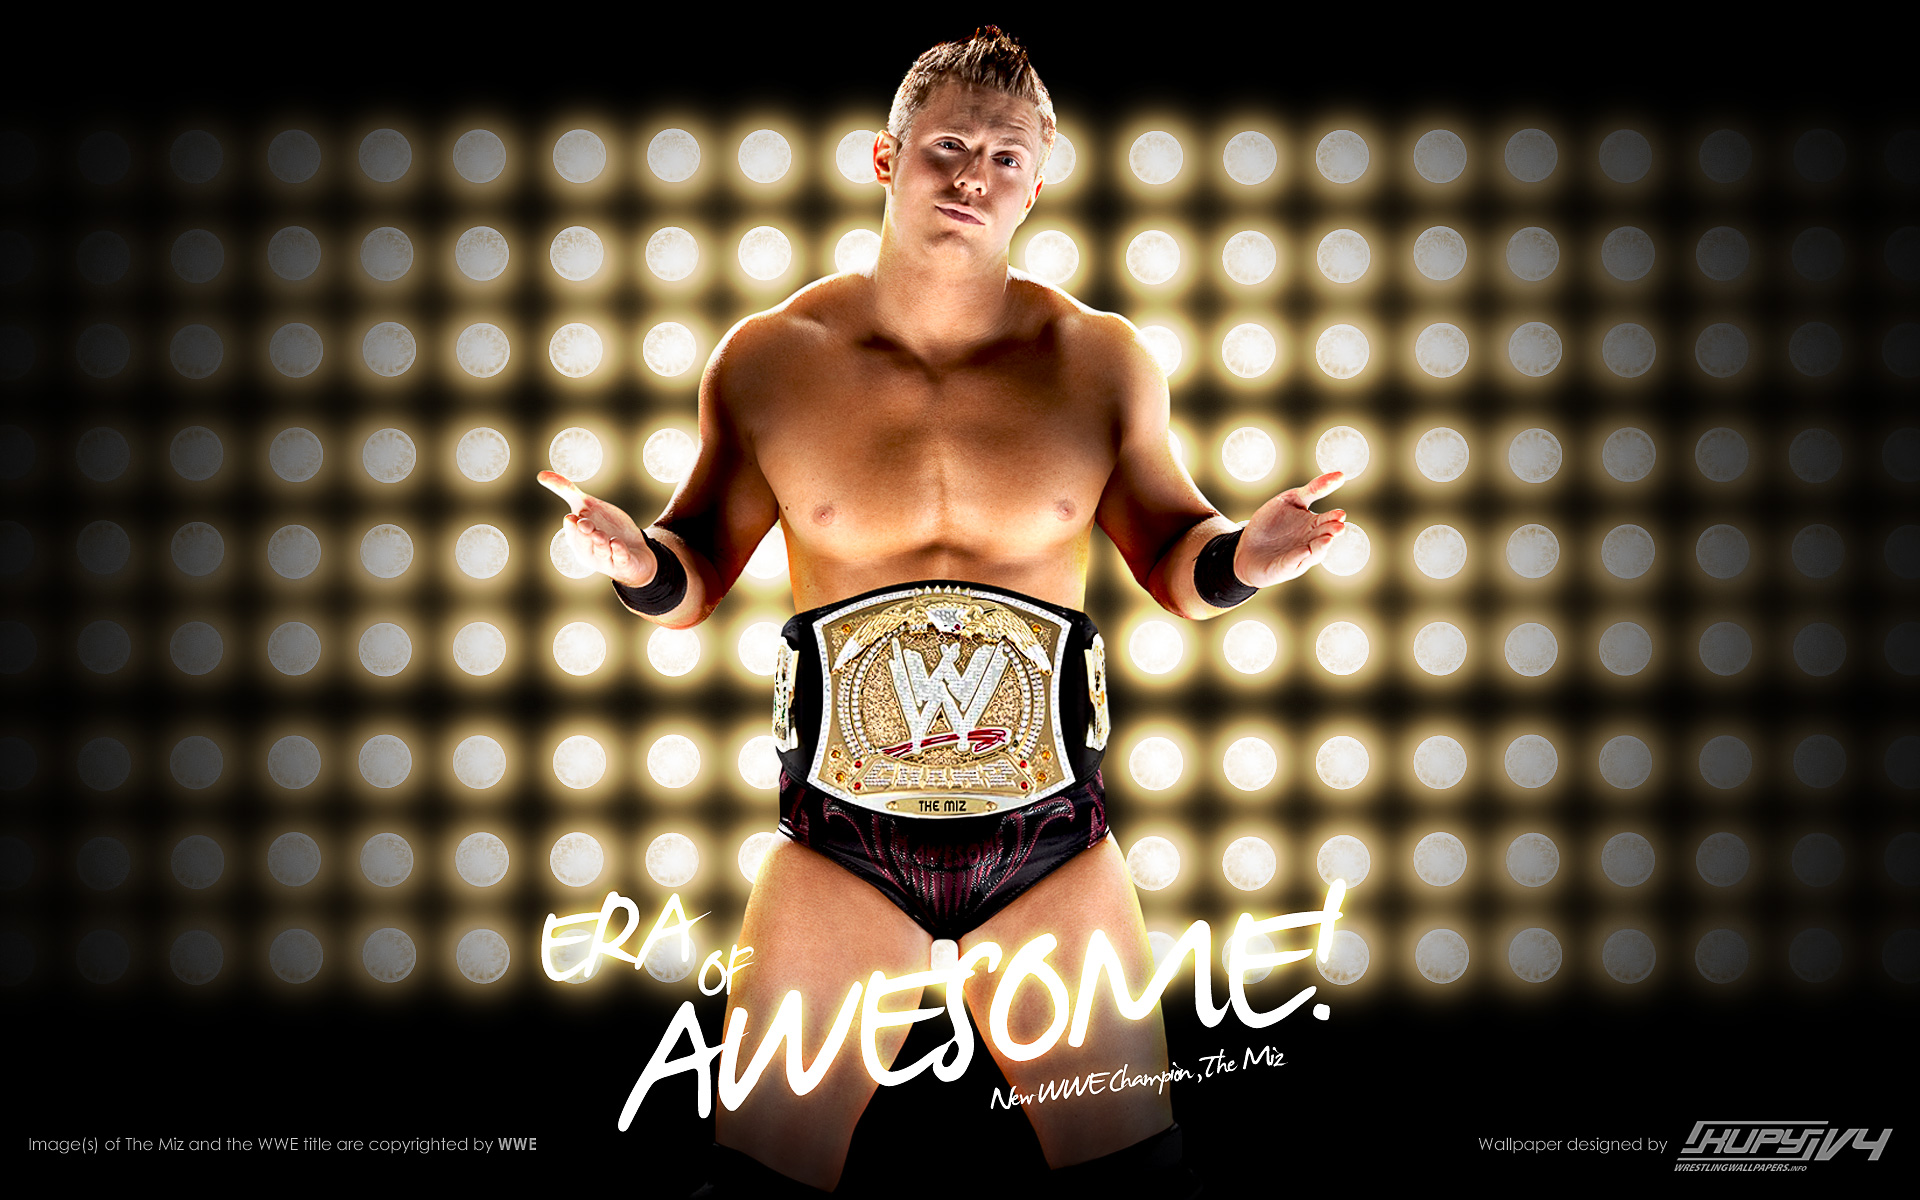 NEW The Miz as WWE Champion wallpaper! 